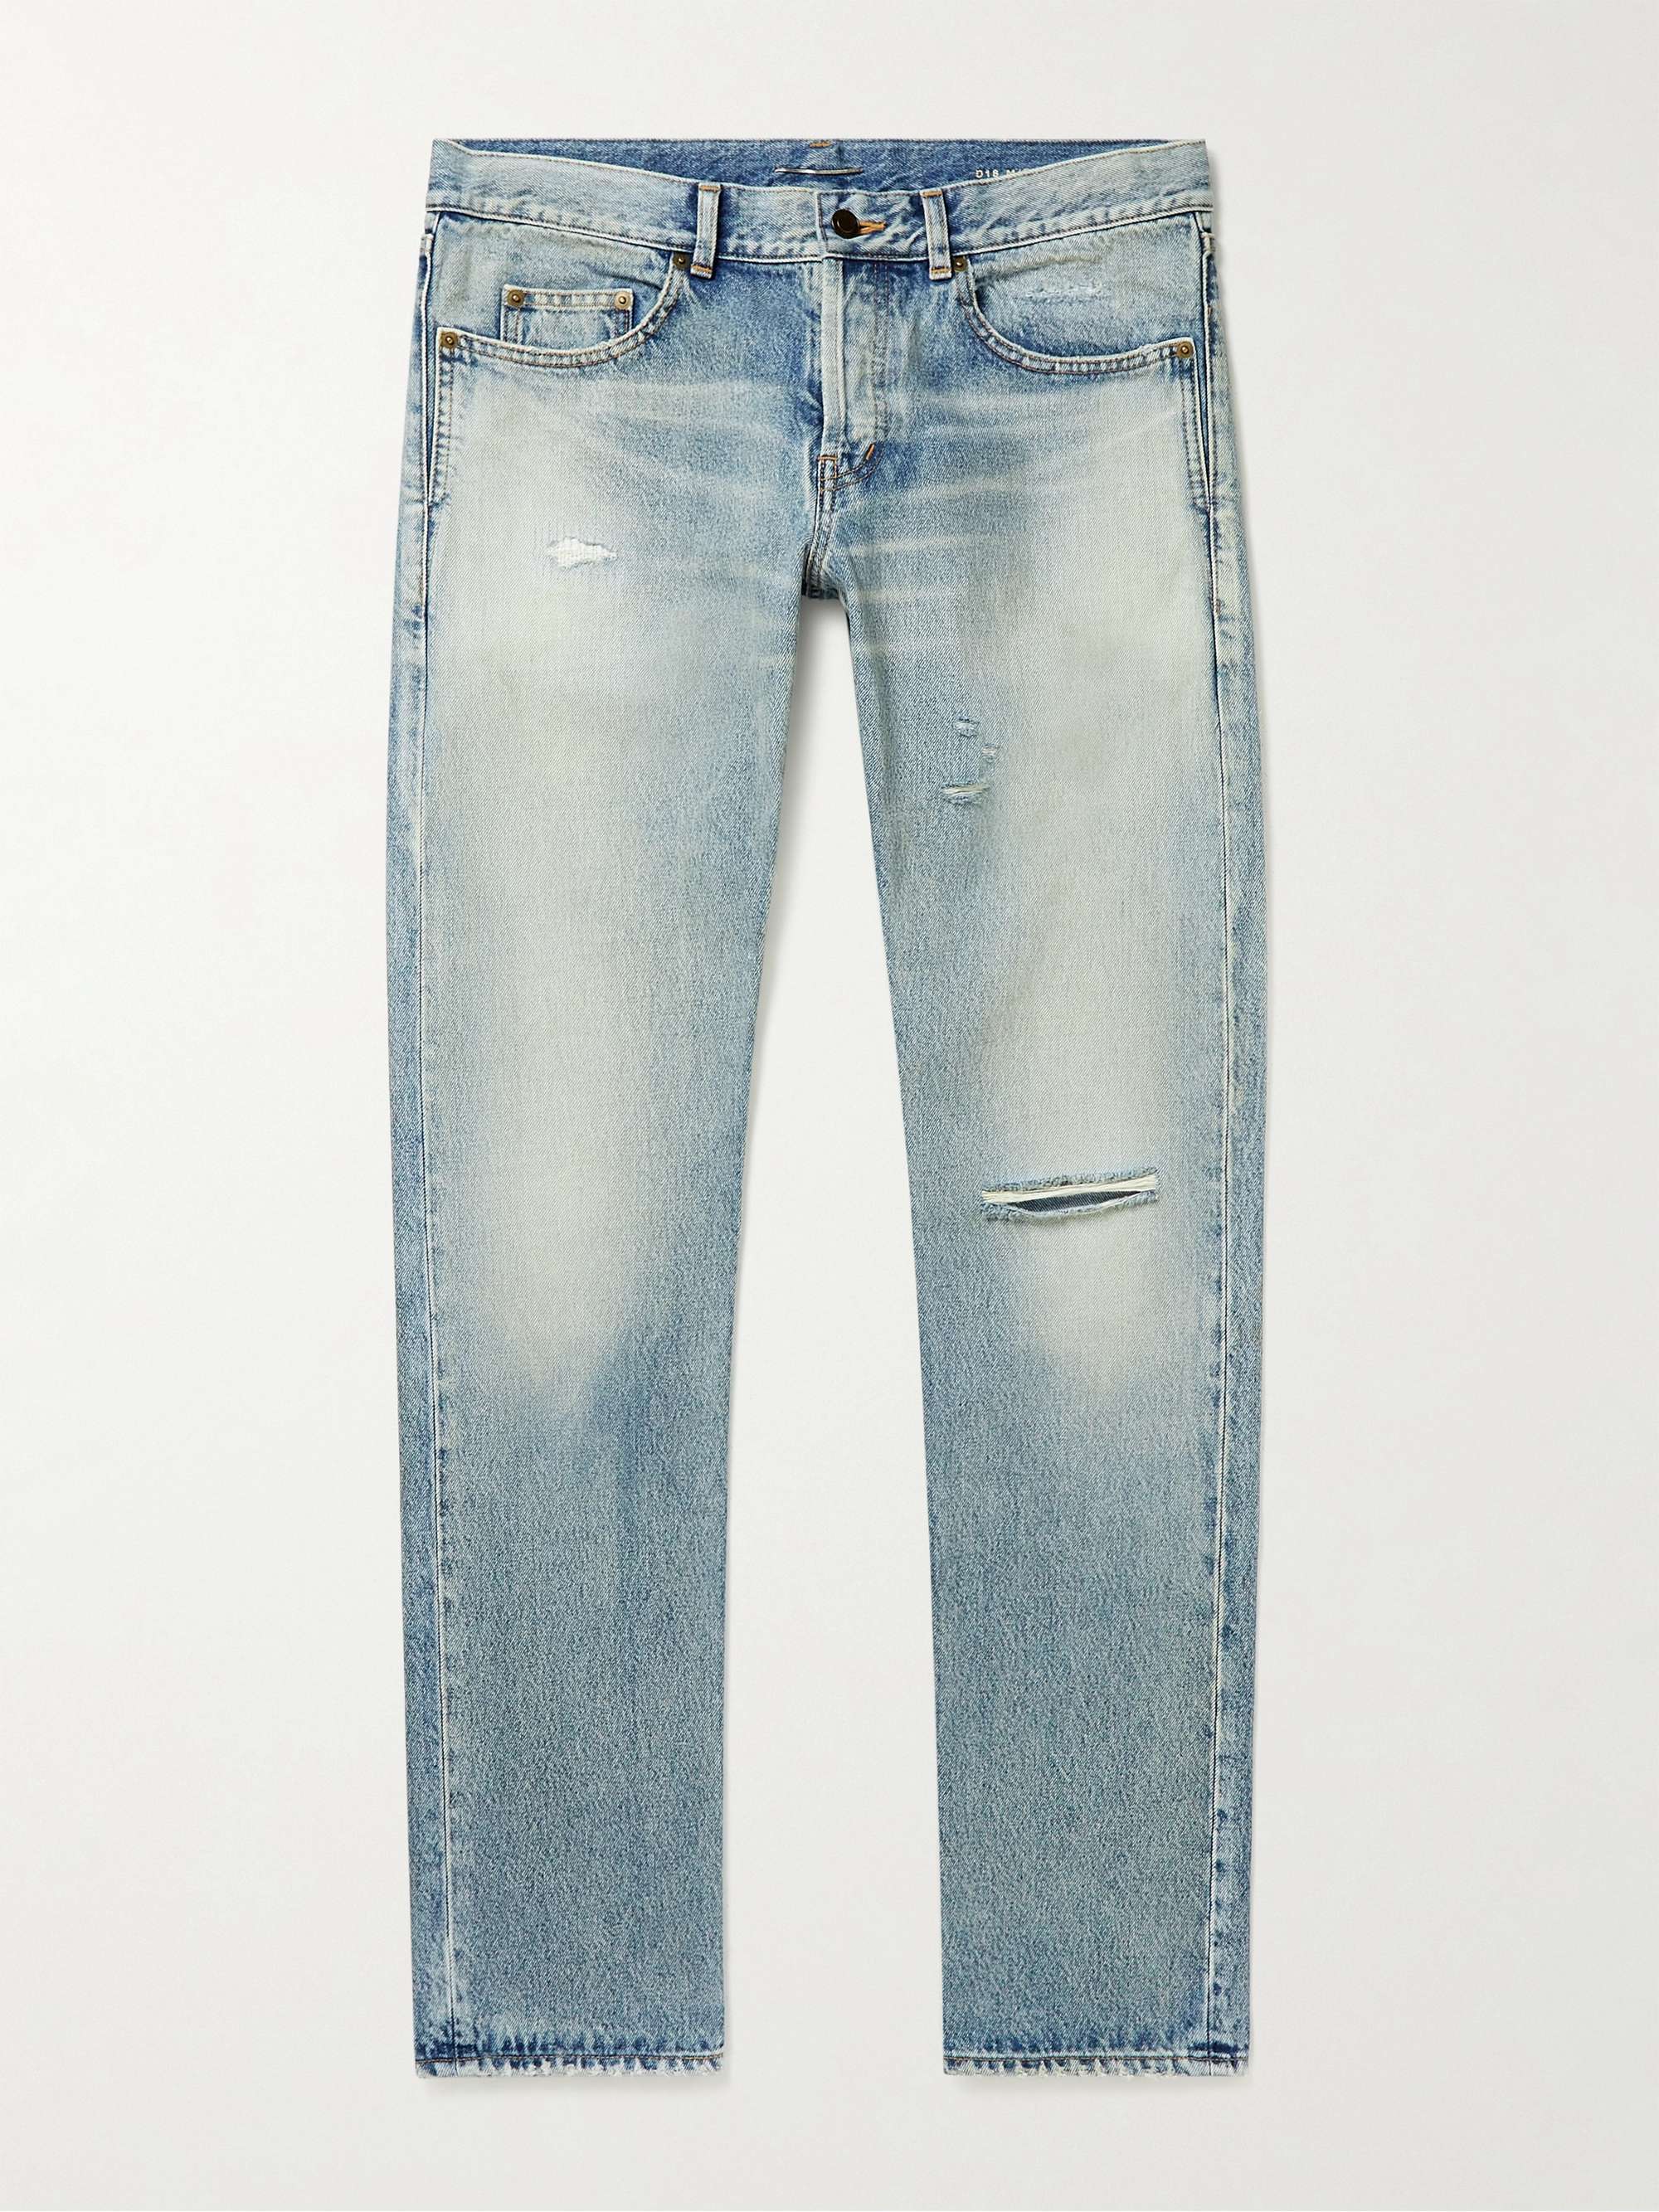 SAINT LAURENT Slim-Fit Distressed Jeans | MR PORTER